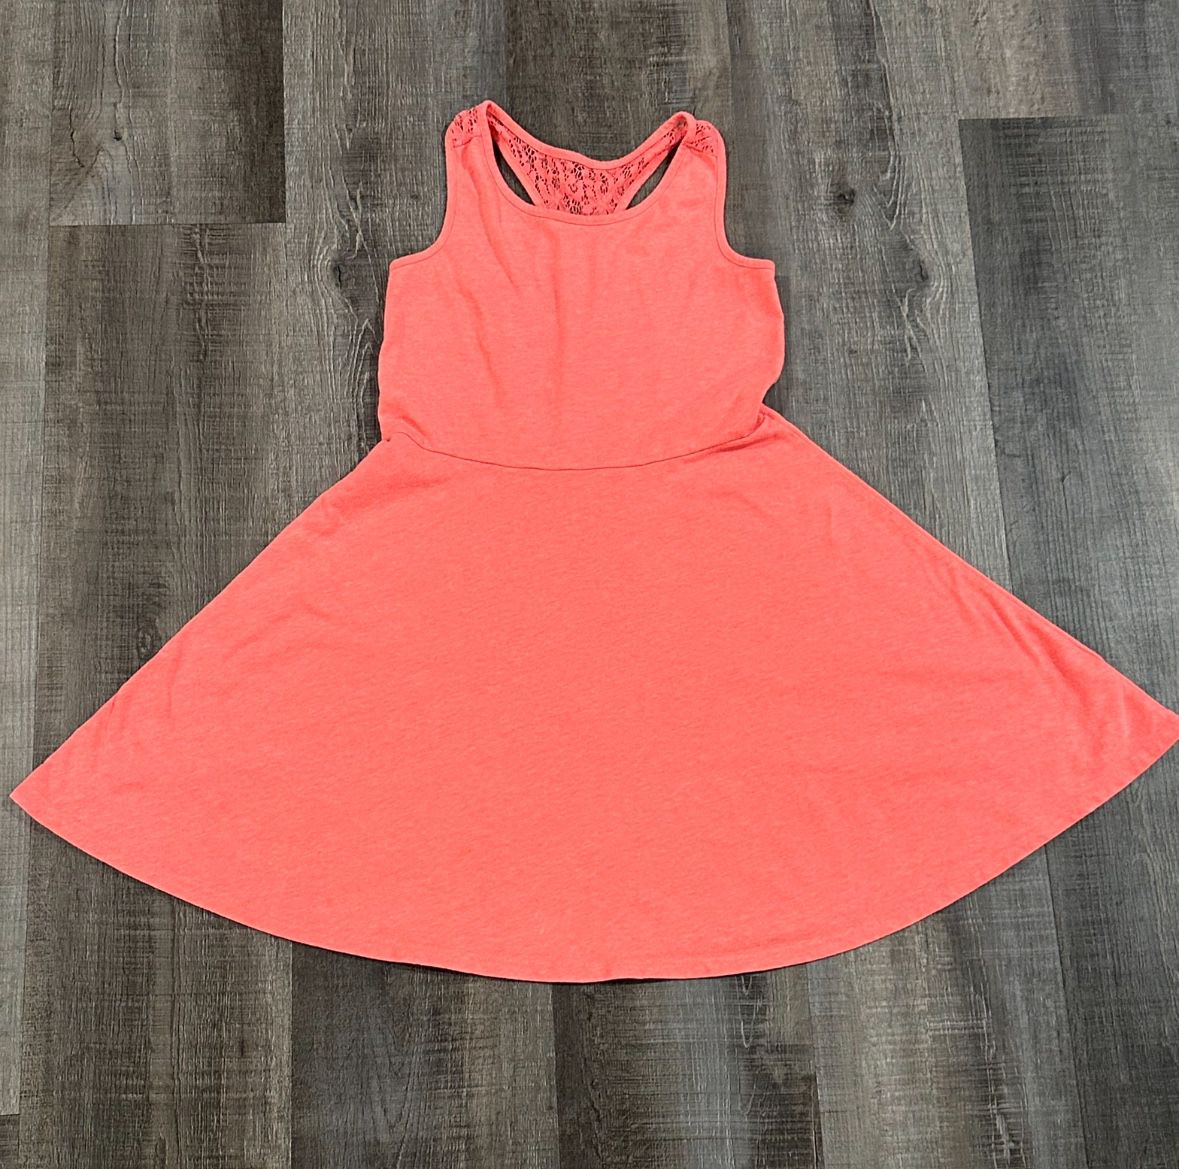 Girls Size 7-8 (Medium) Coral Racerback Dress